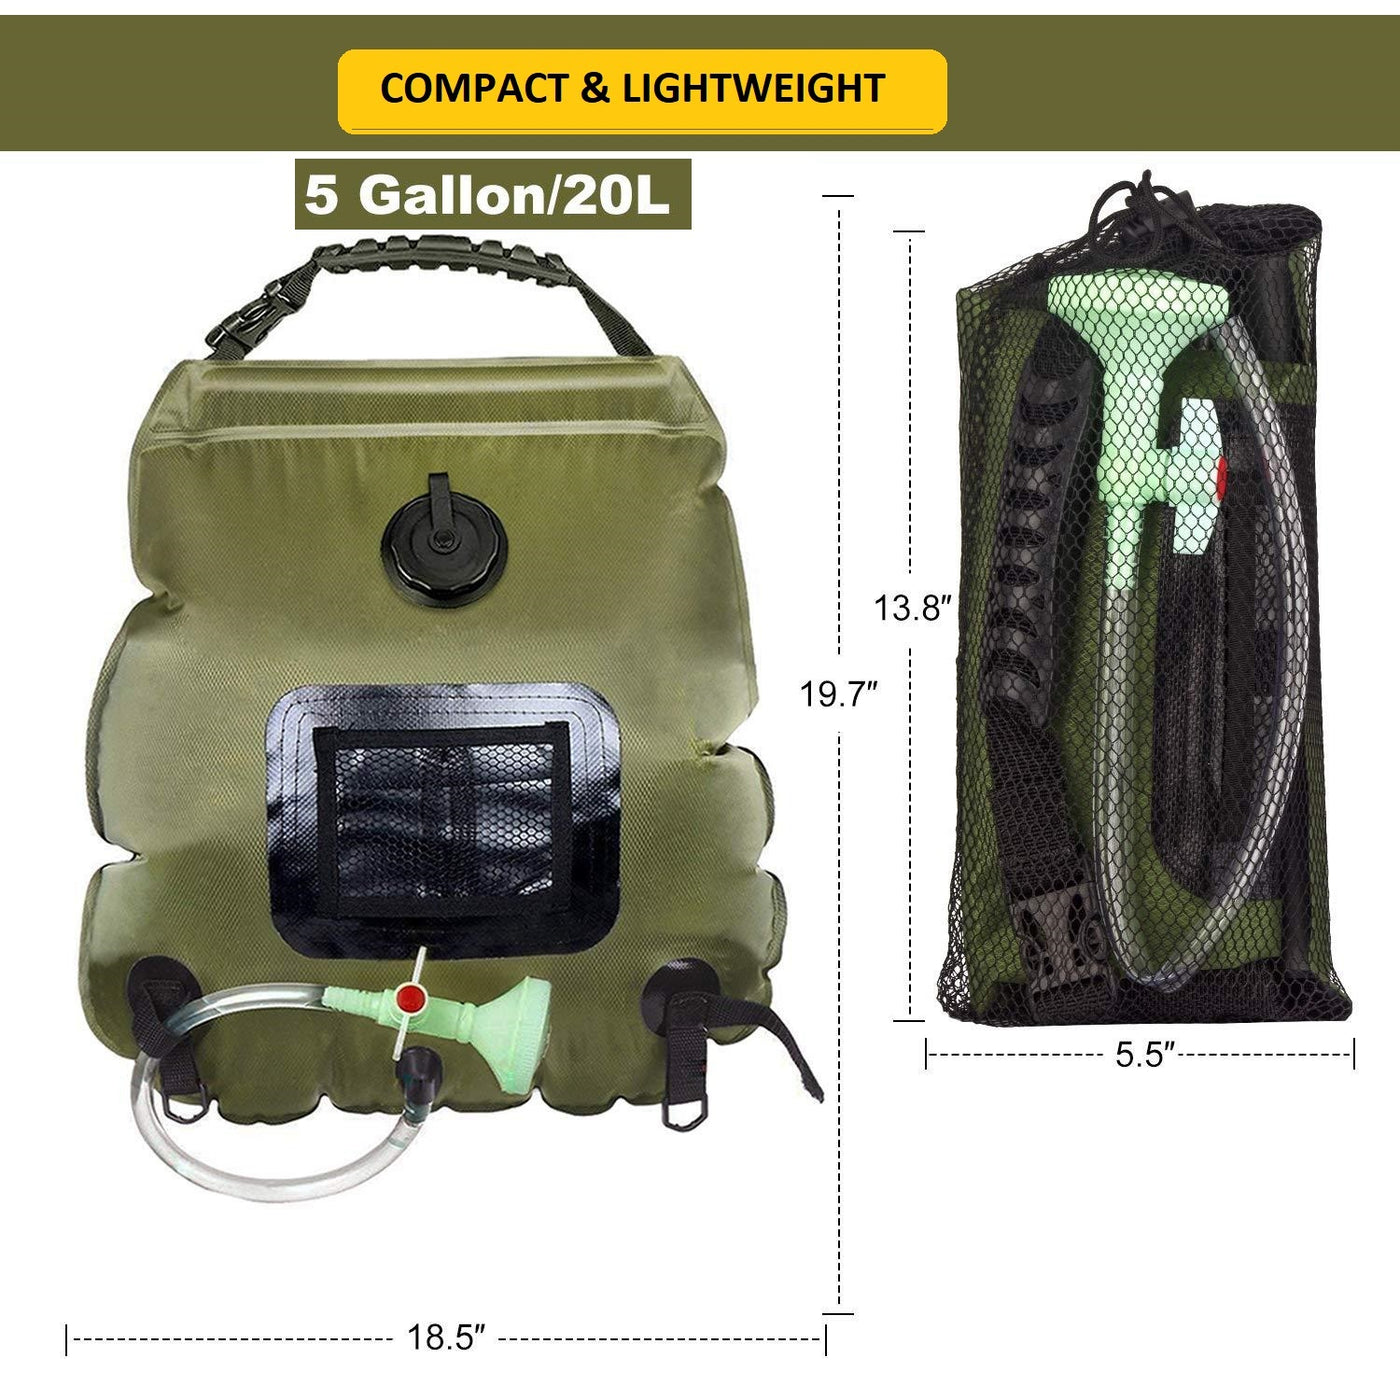 Solar Shower Bag - Portable Outdoor Camping Heating Shower Bag